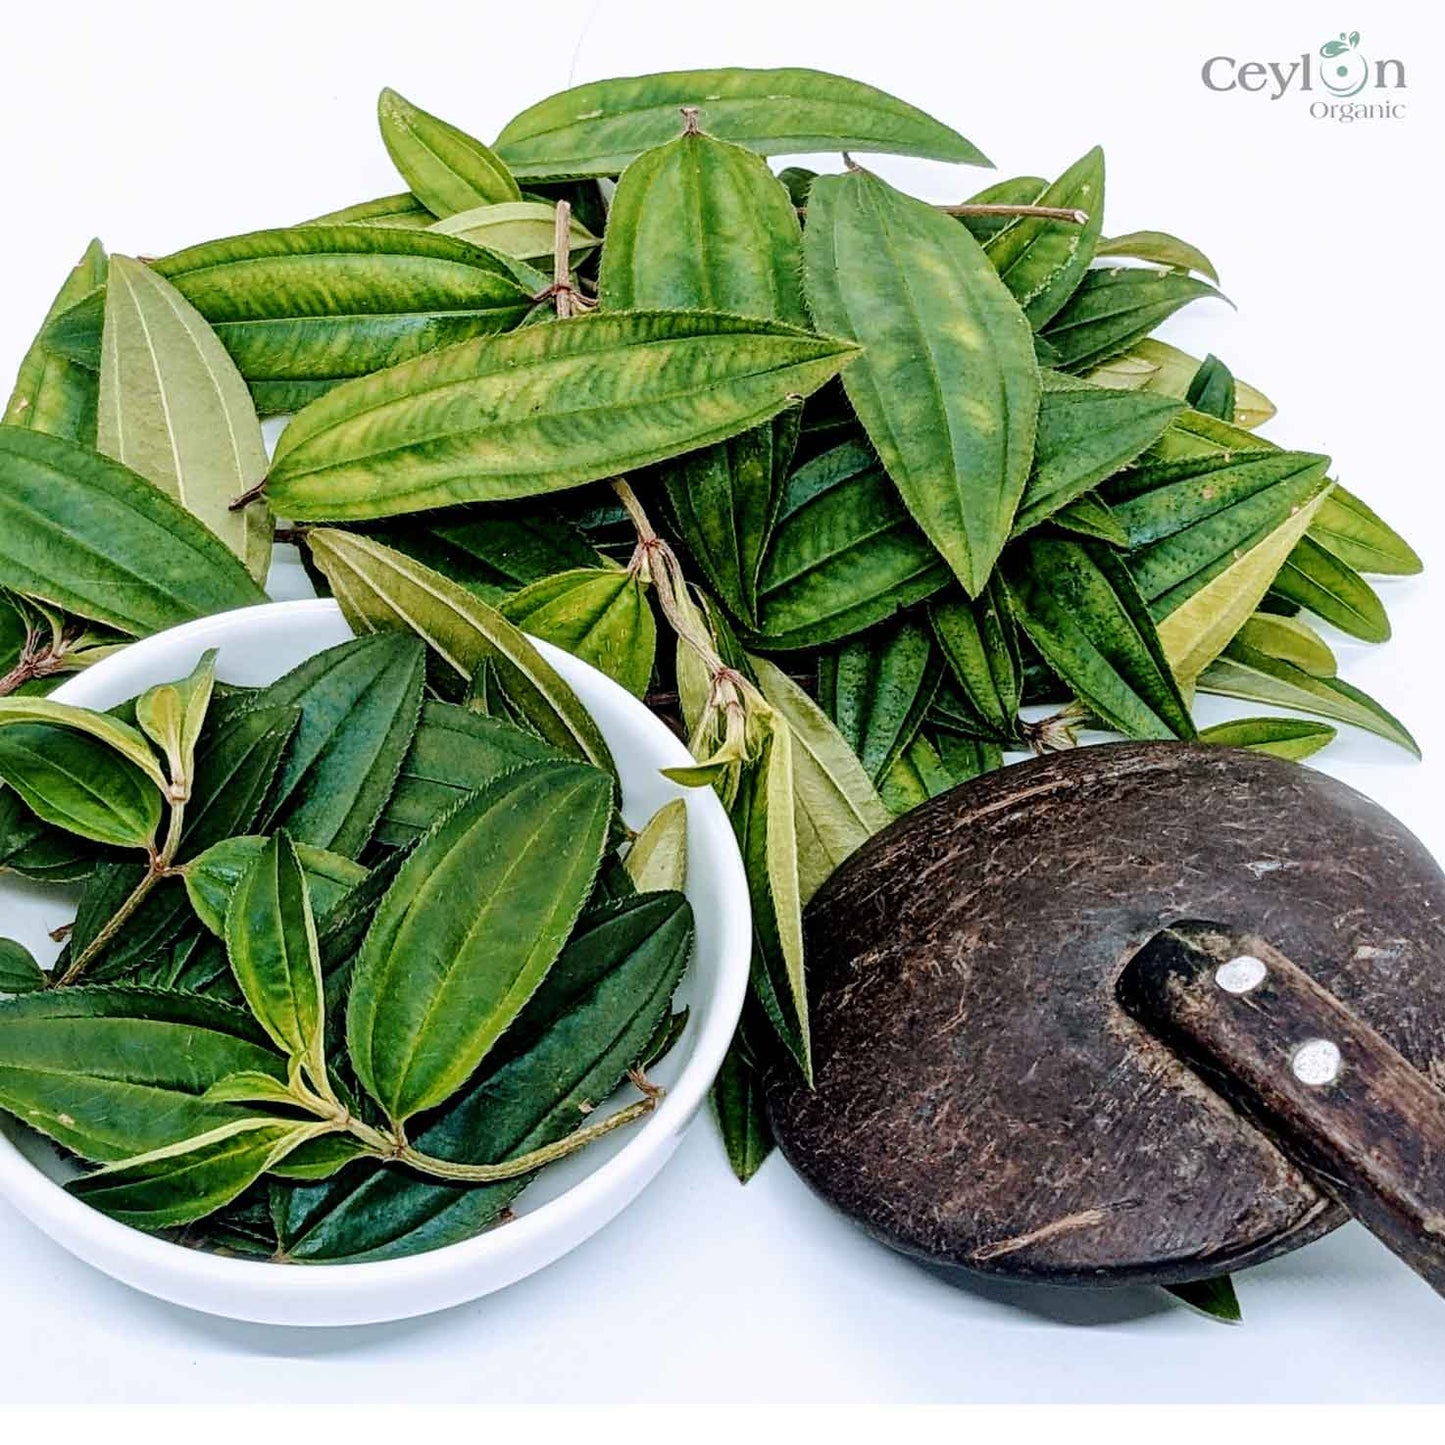 3kg+ Organic liver plant leaves Heen bovitiya(Osbeckia octandra) | Ceylon organic-2